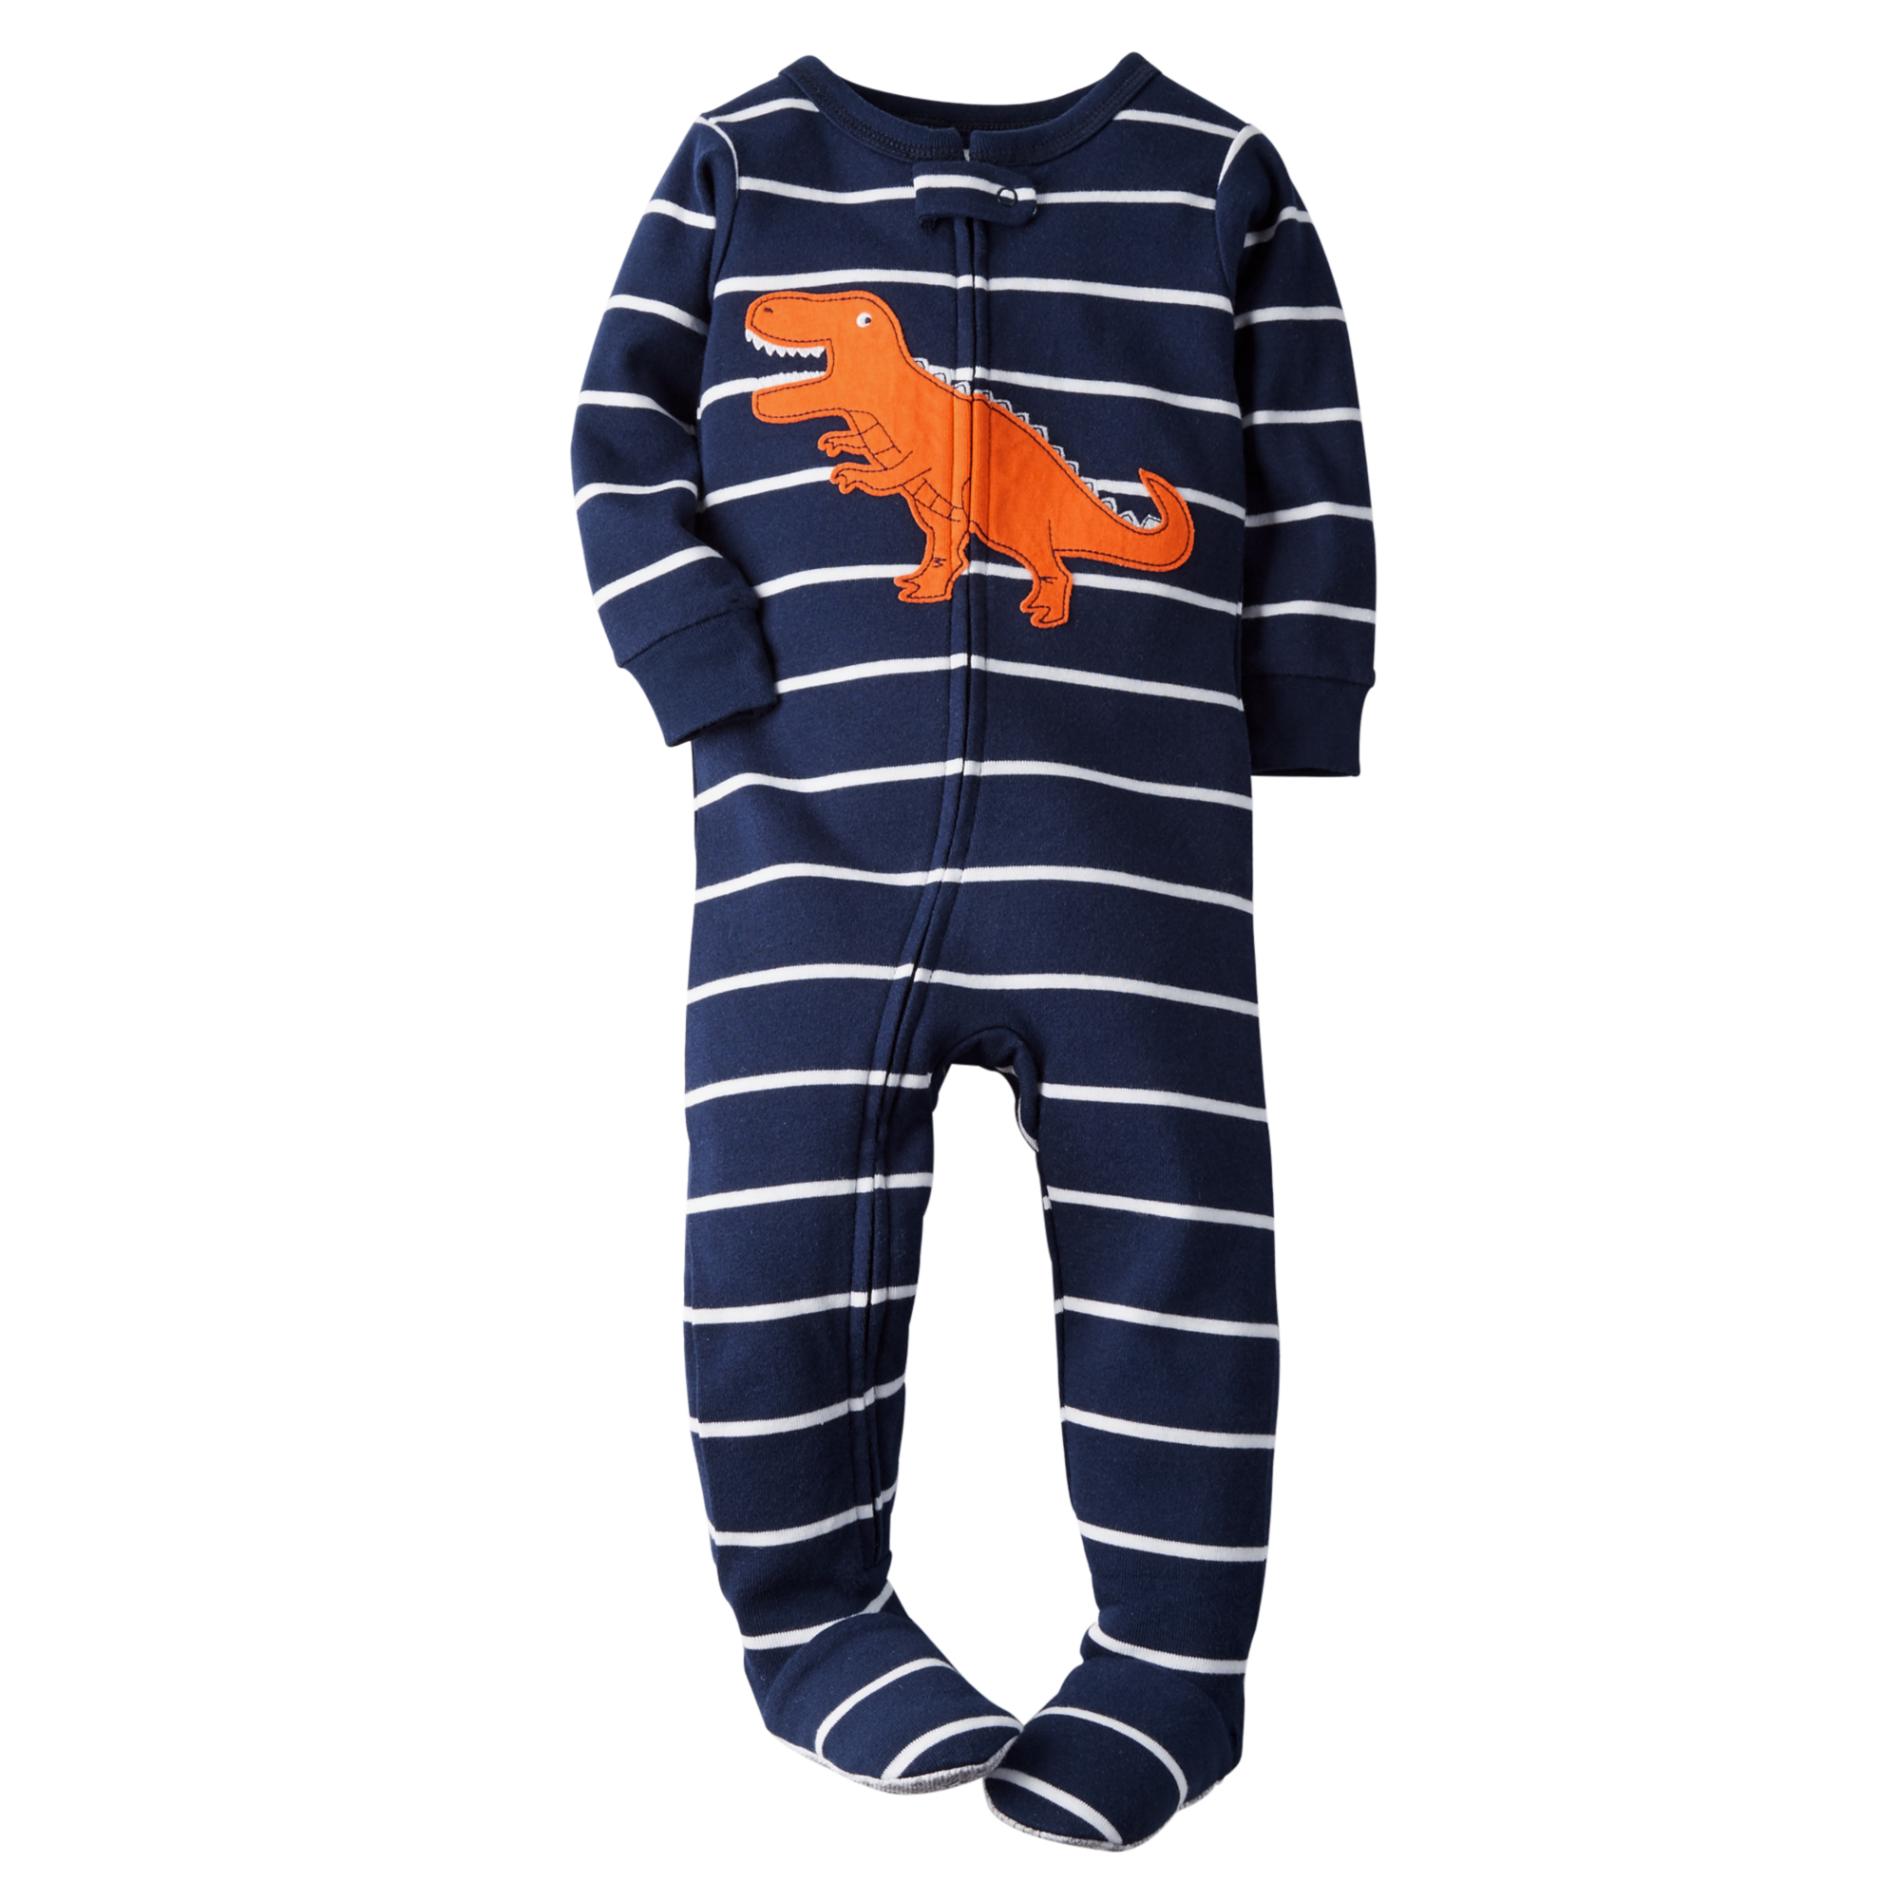 Carter's Infant & Toddler Boy's Footed Pajamas - Dinosaur